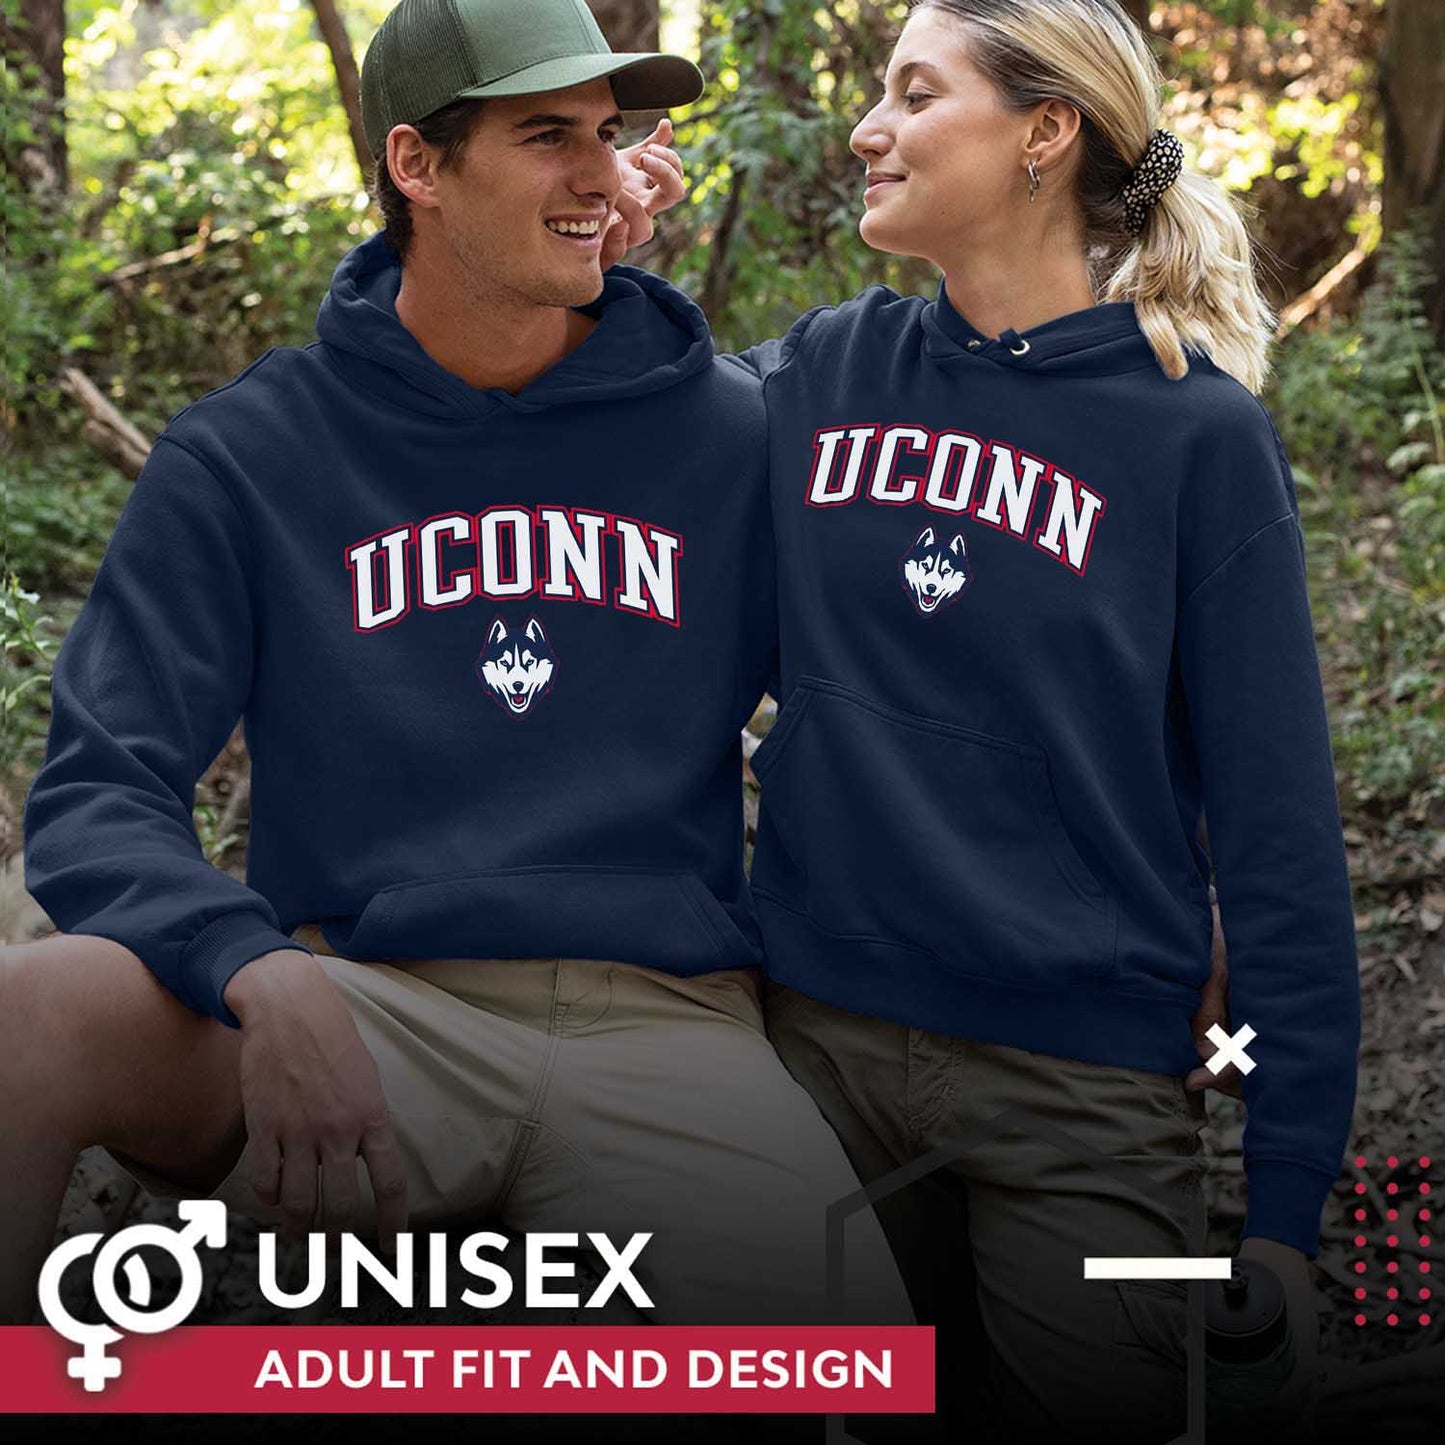 UCONN Huskies Adult Arch & Logo Soft Style Gameday Hooded Sweatshirt - Navy